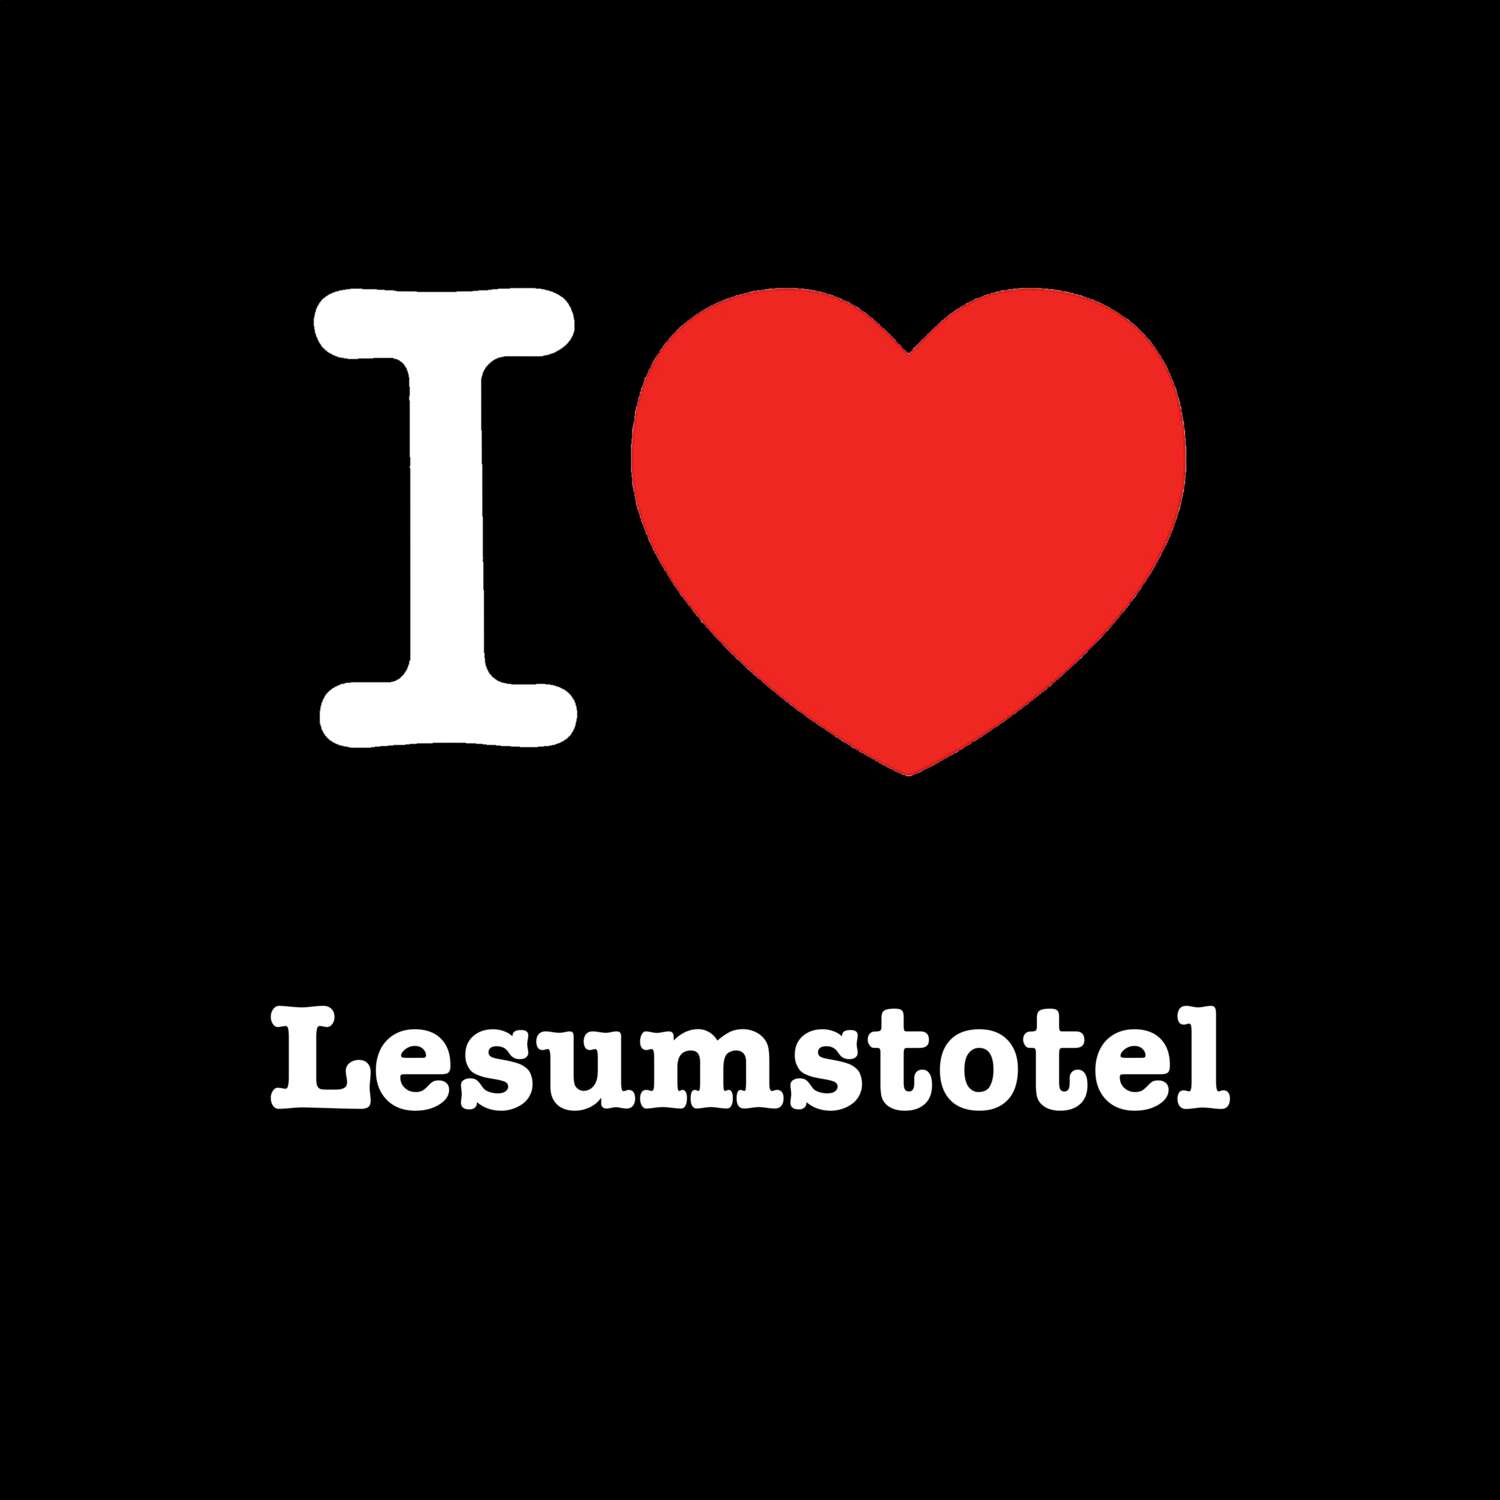 Lesumstotel T-Shirt »I love«